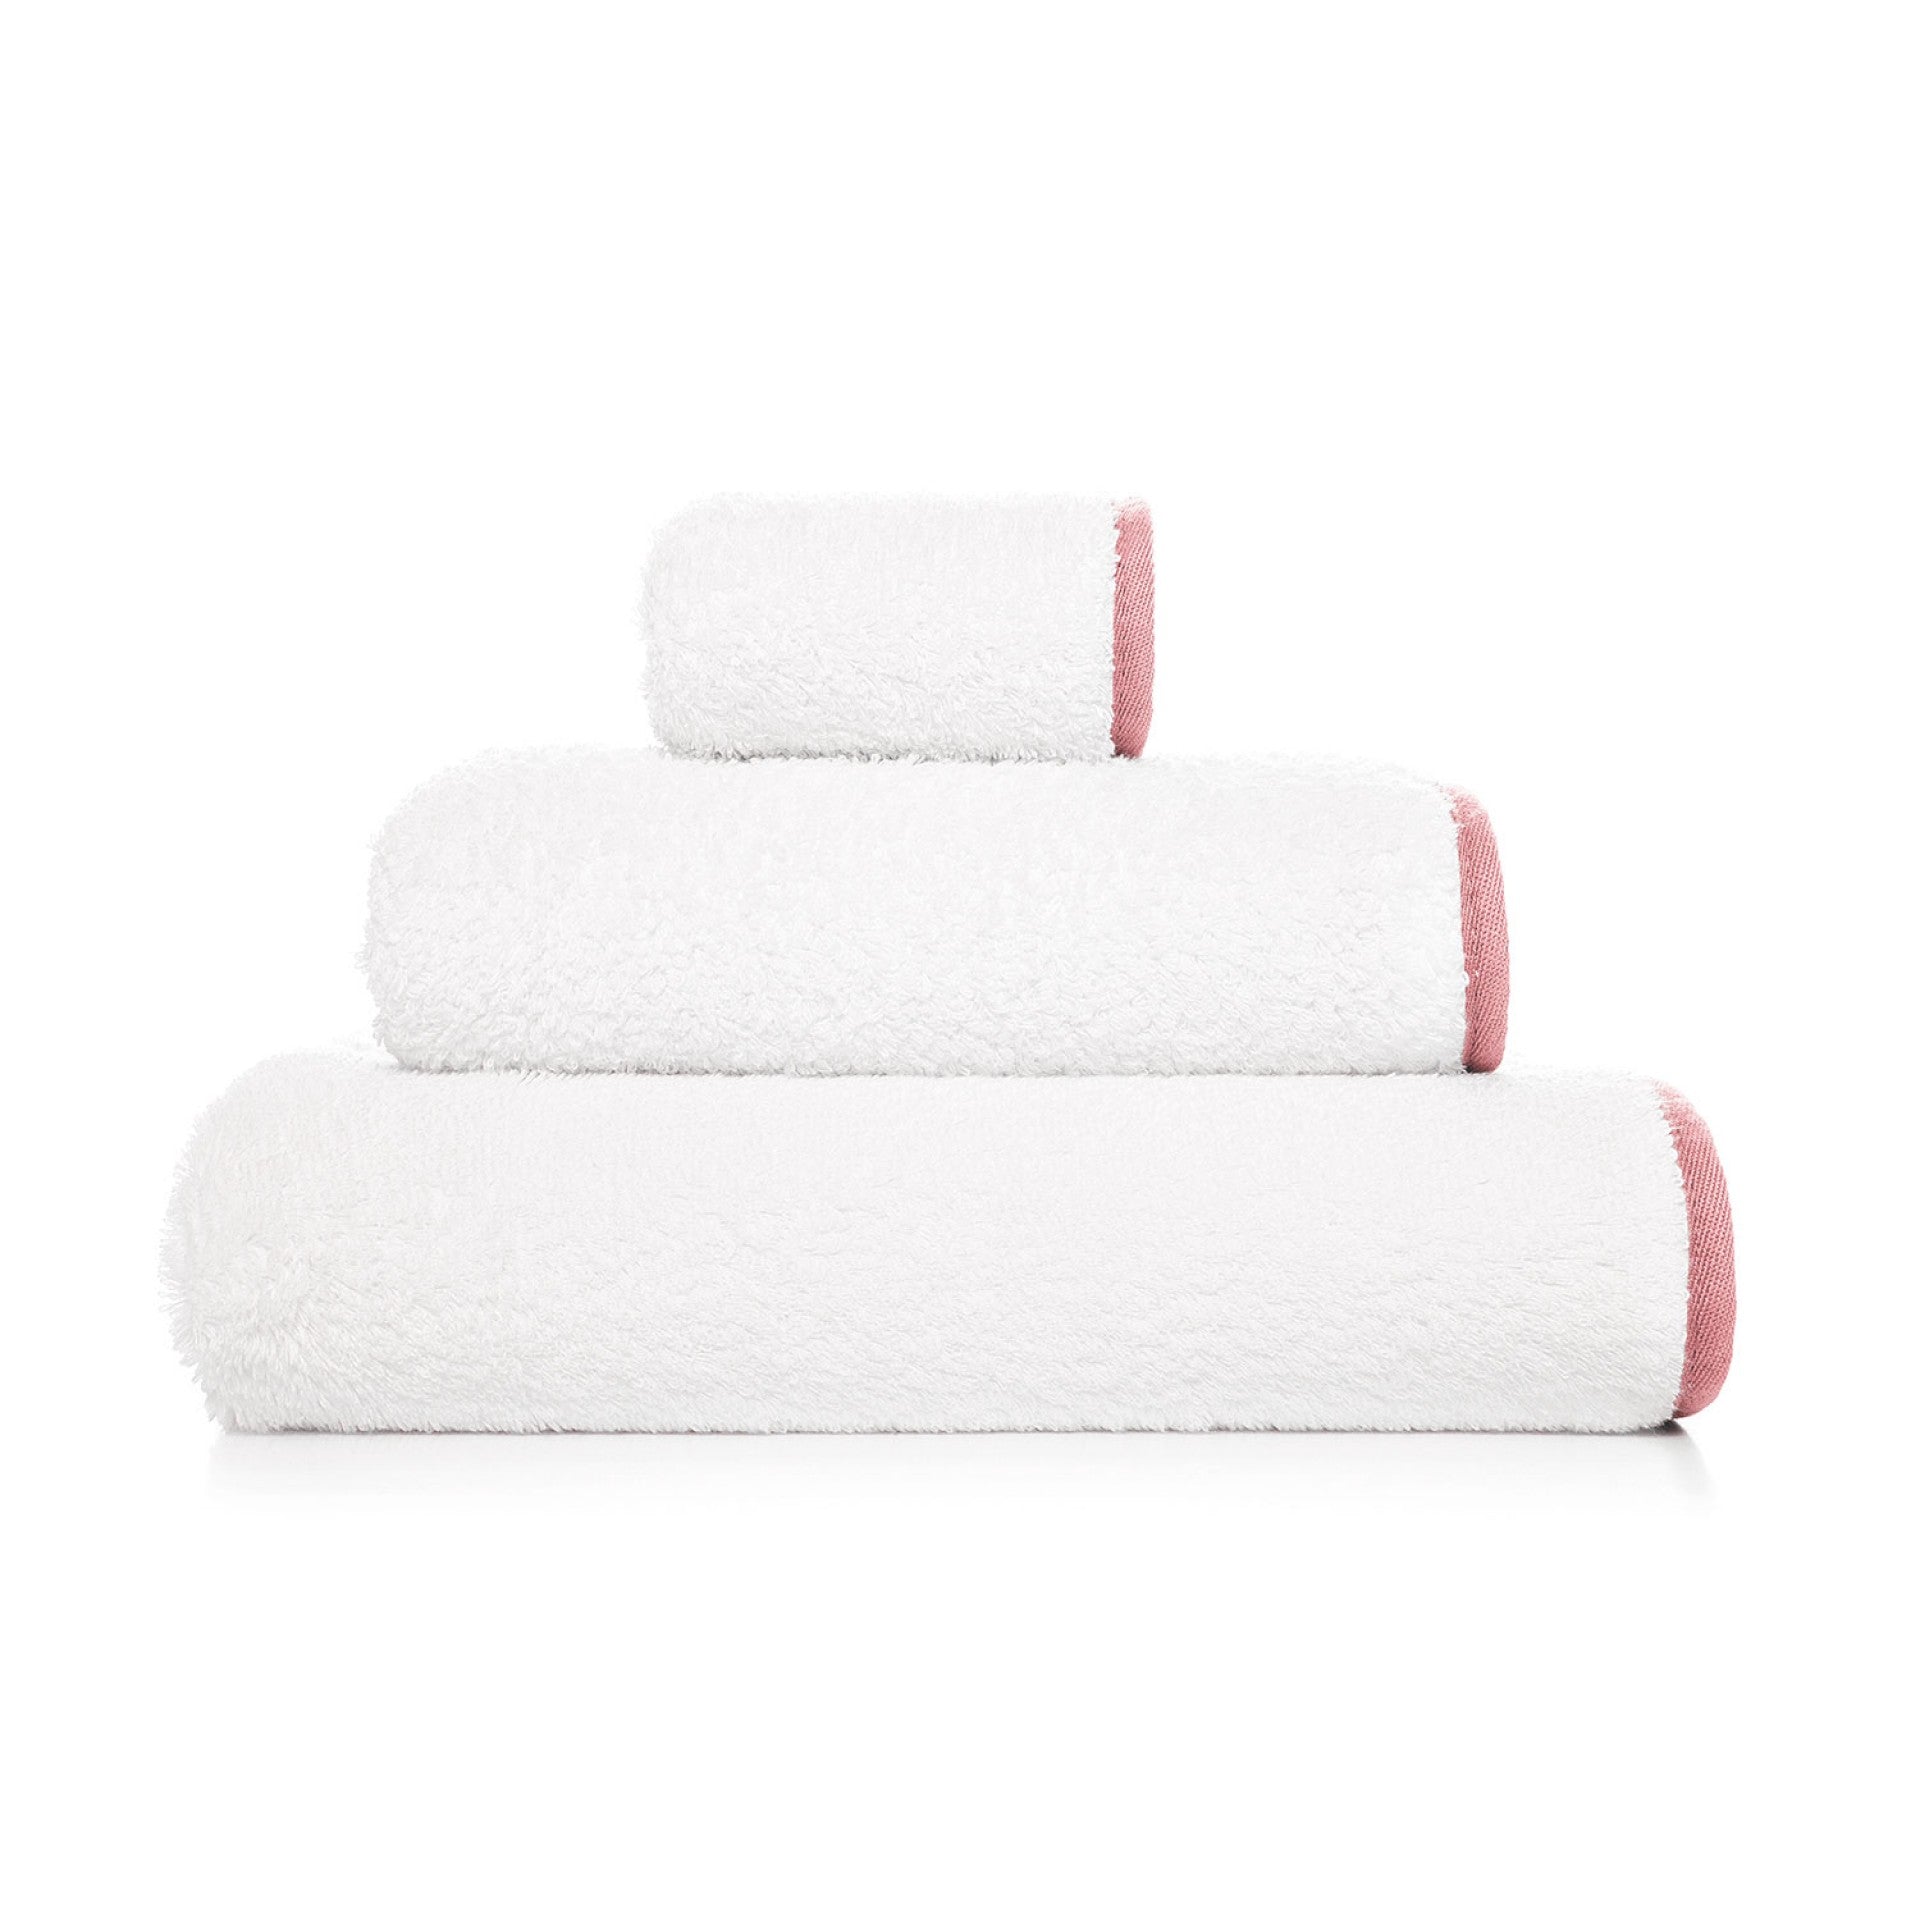 Portobello Egyptian Cotton Bath towel